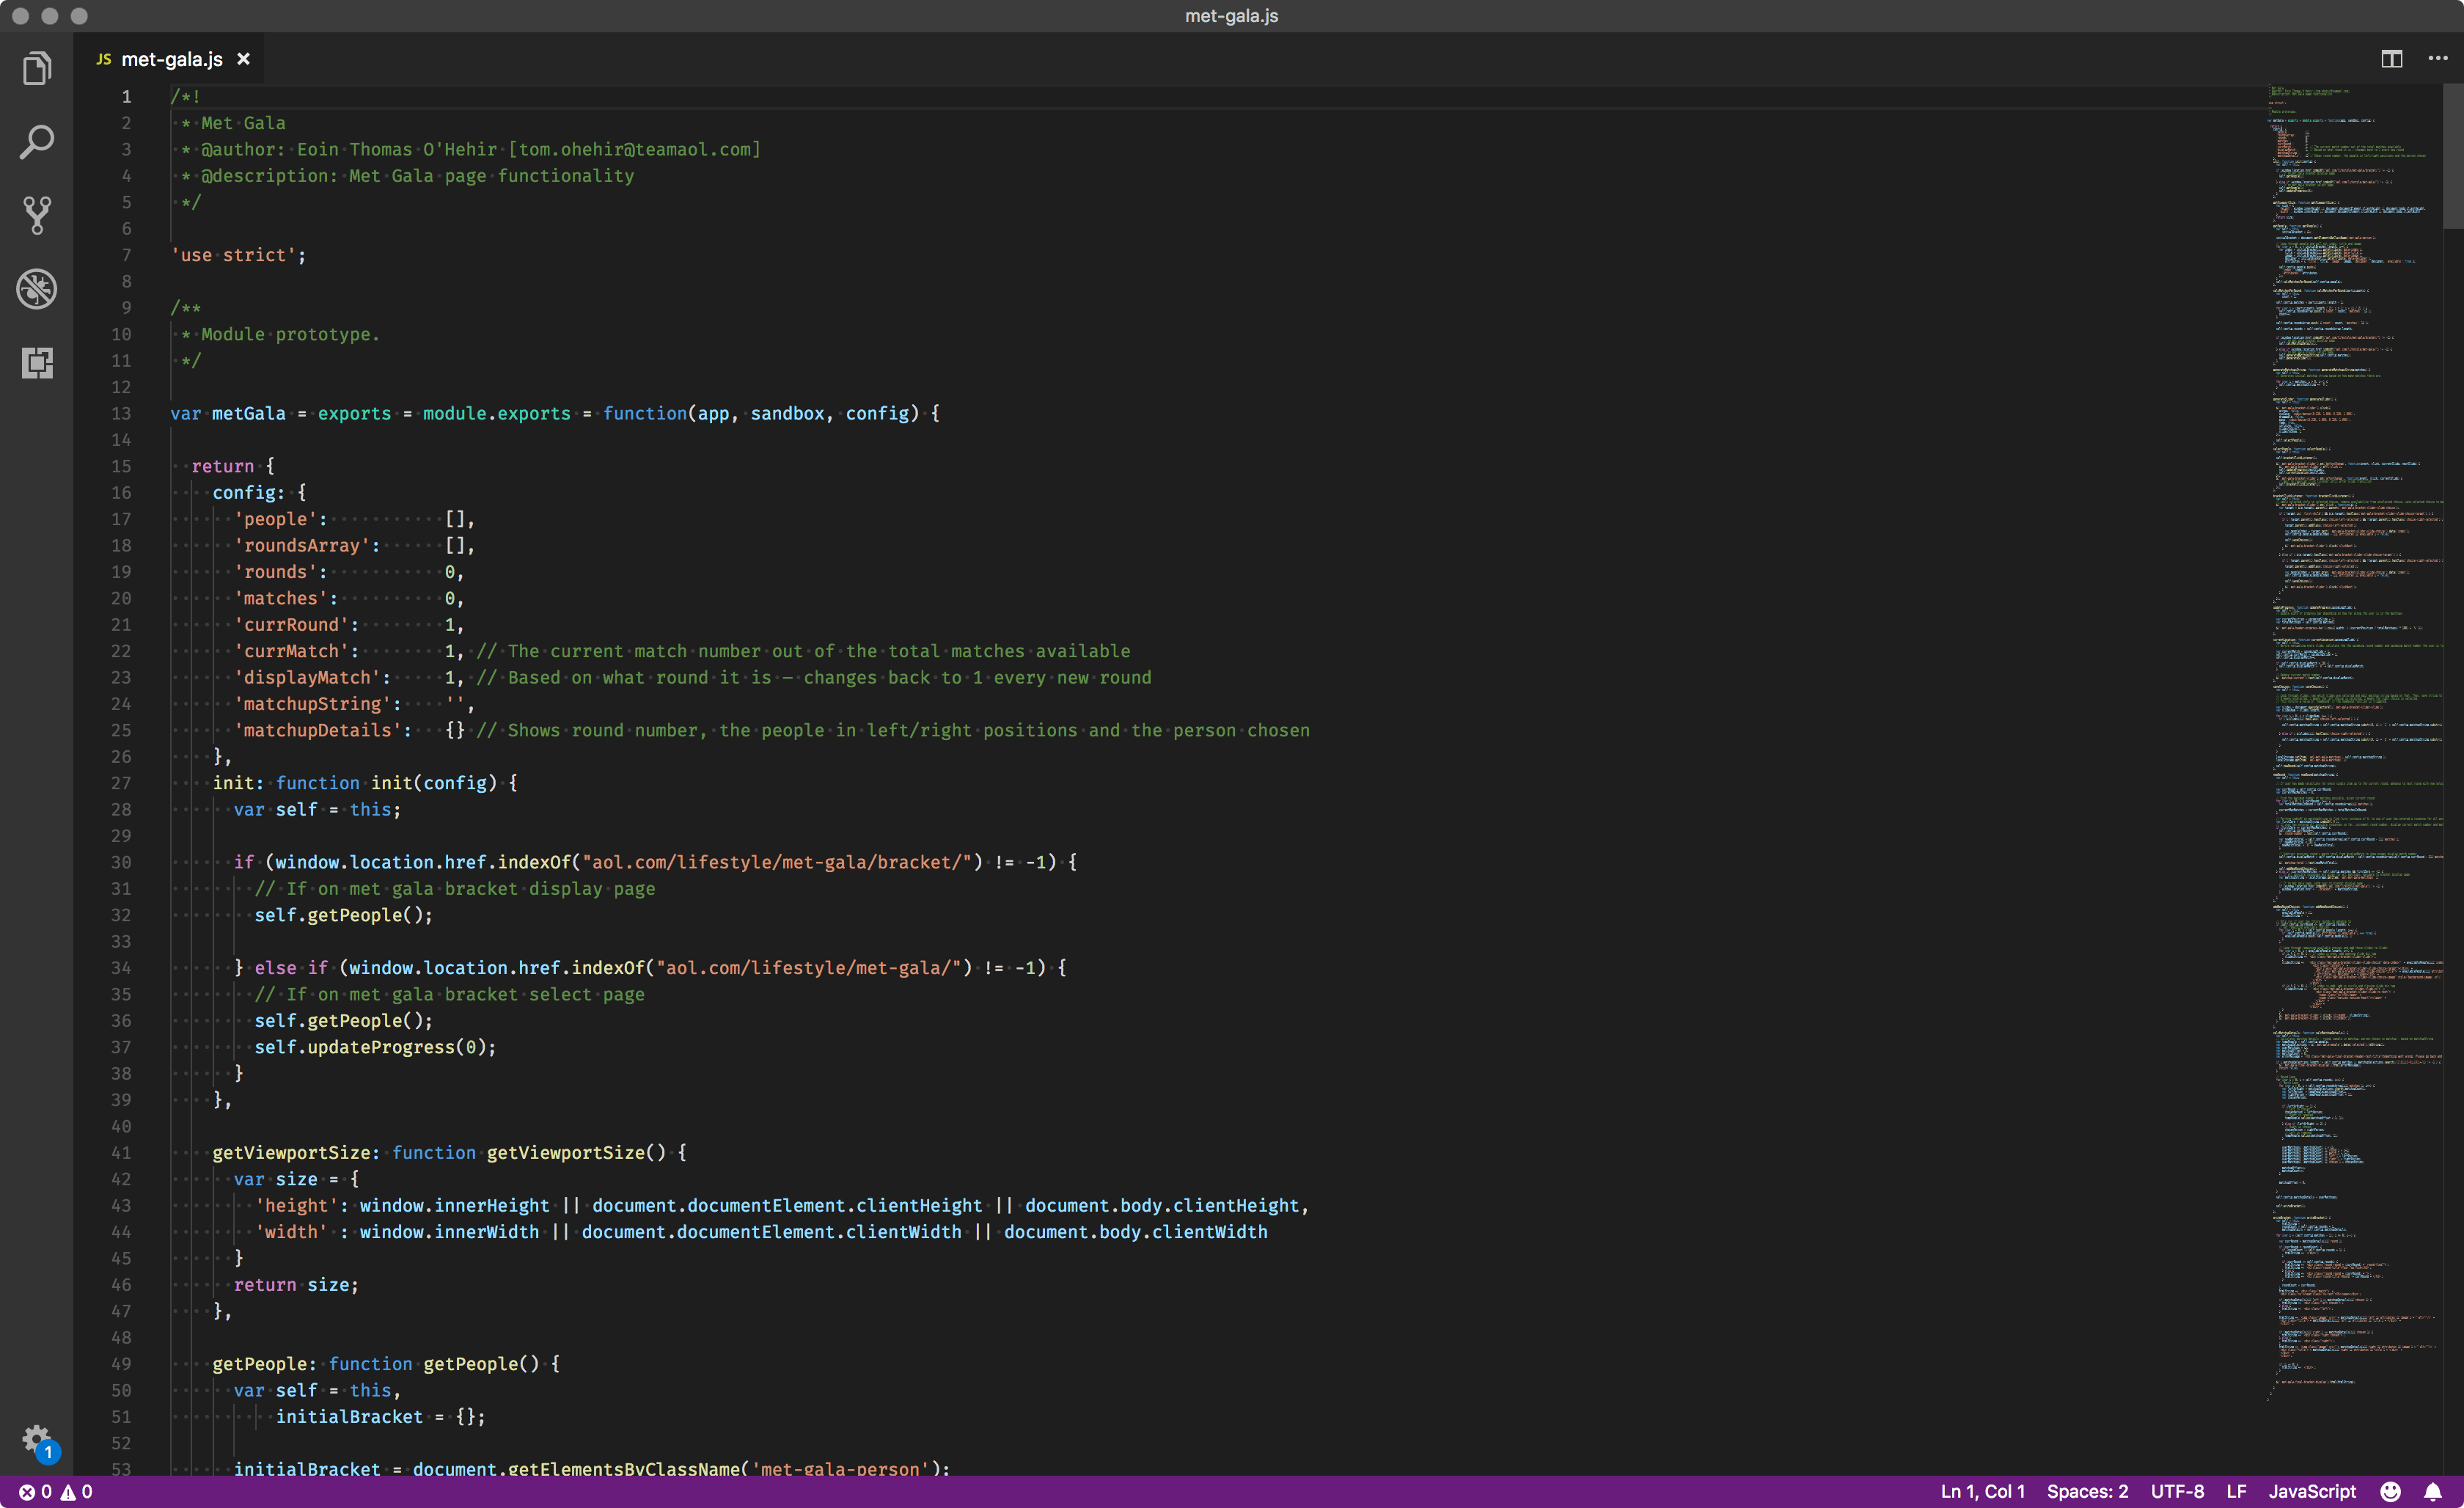 Screenshot of a VSCode window with JavaScript code from met-gala.js